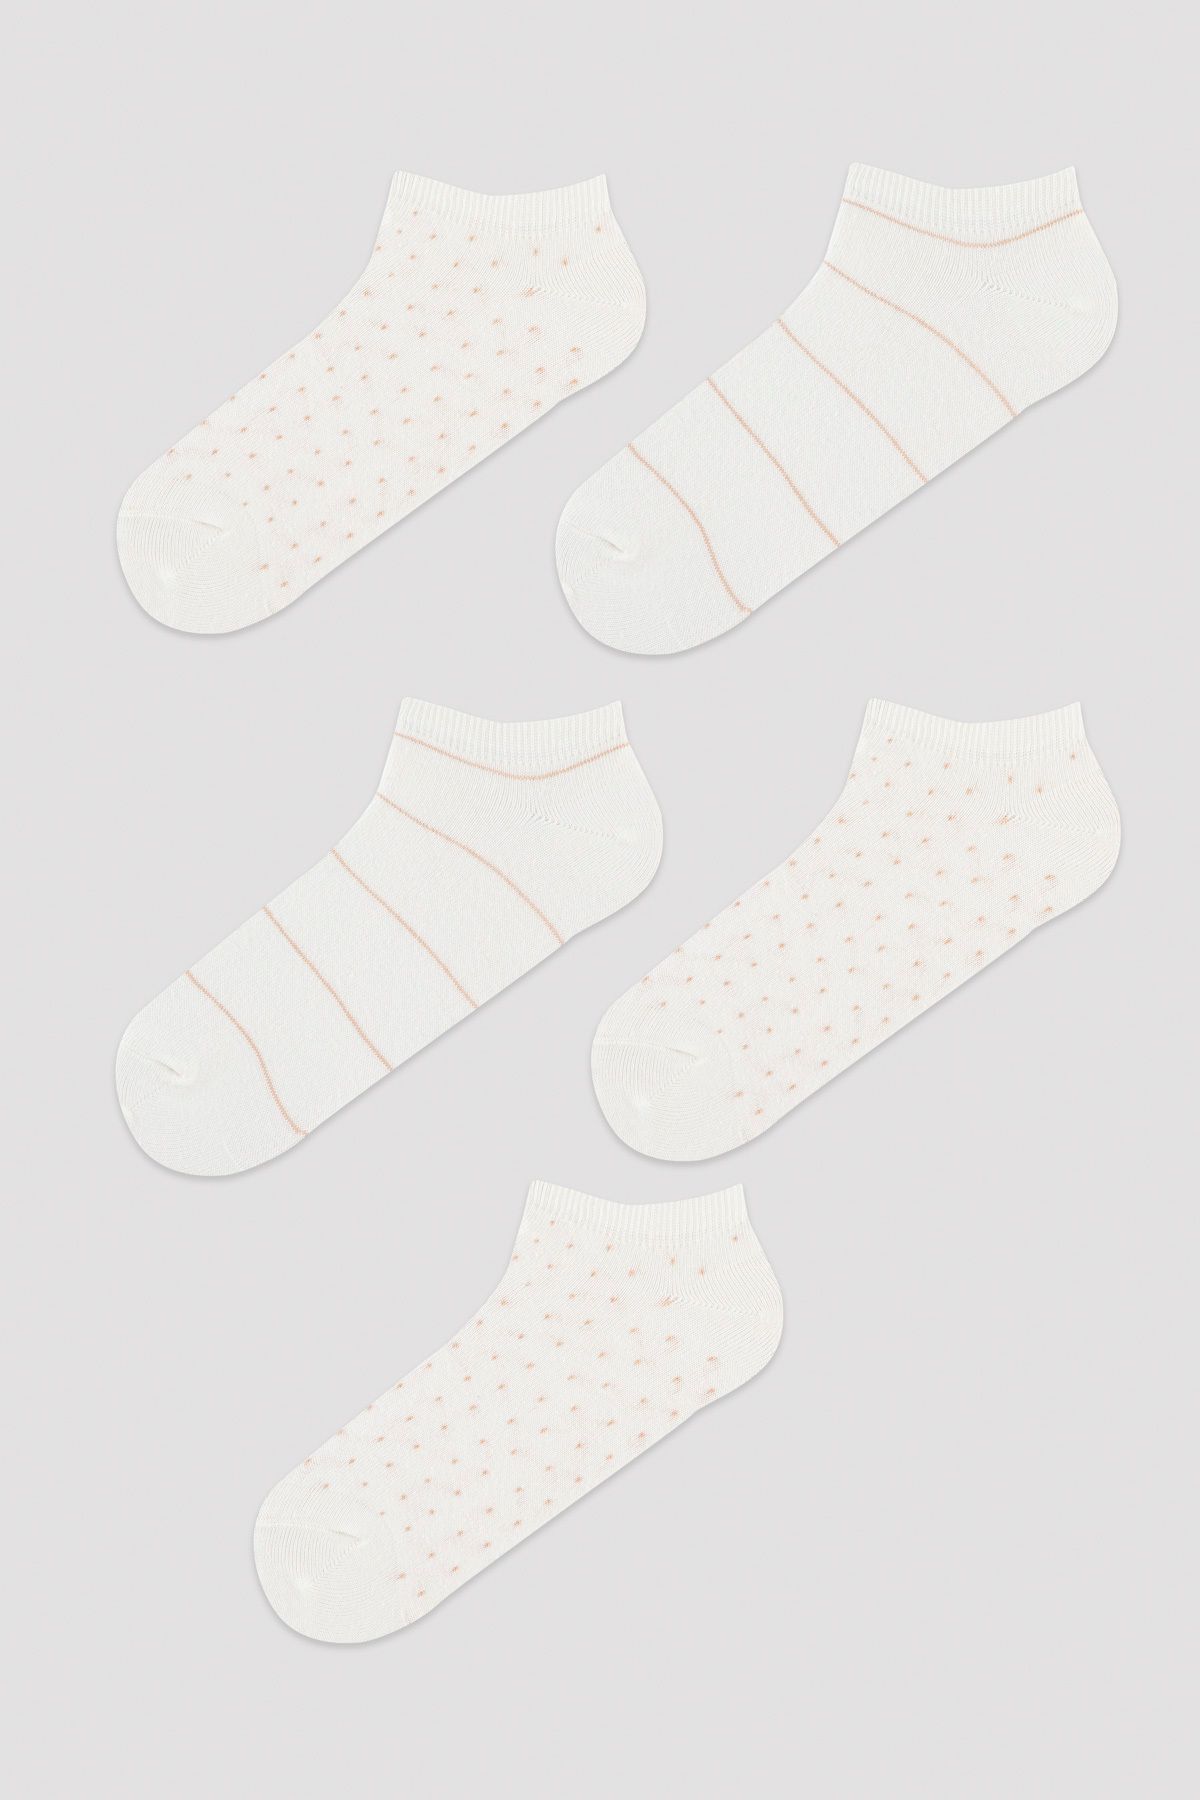 Penti Kahverengi Detaylı 5li Patik Çorap